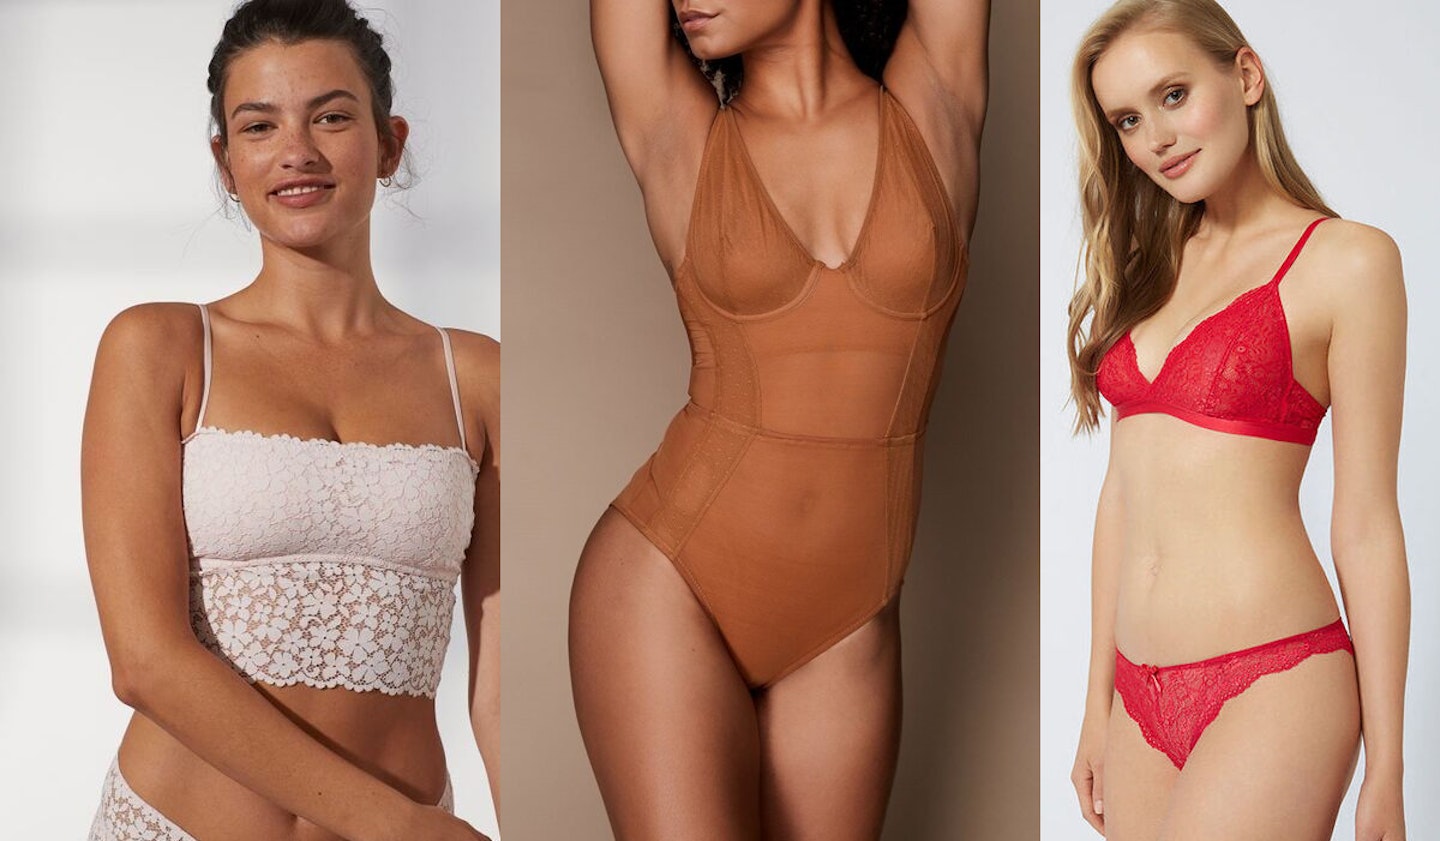 Best lingerie brands 2020: Lingerie brands for every body type